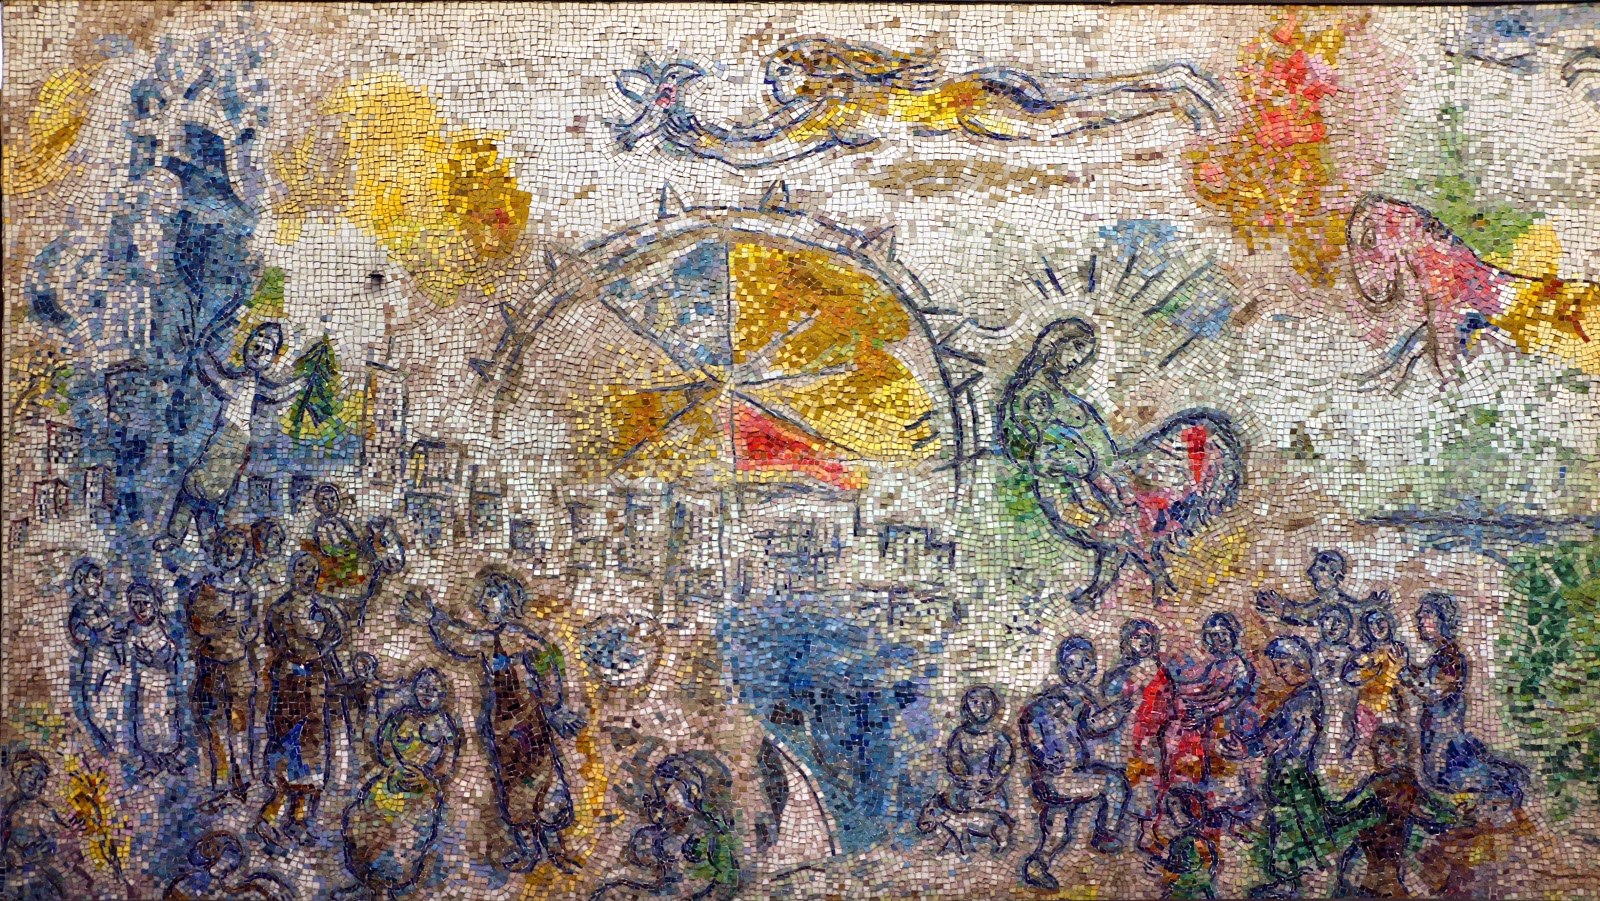 Marc+Chagall-1887-1985 (67).jpg